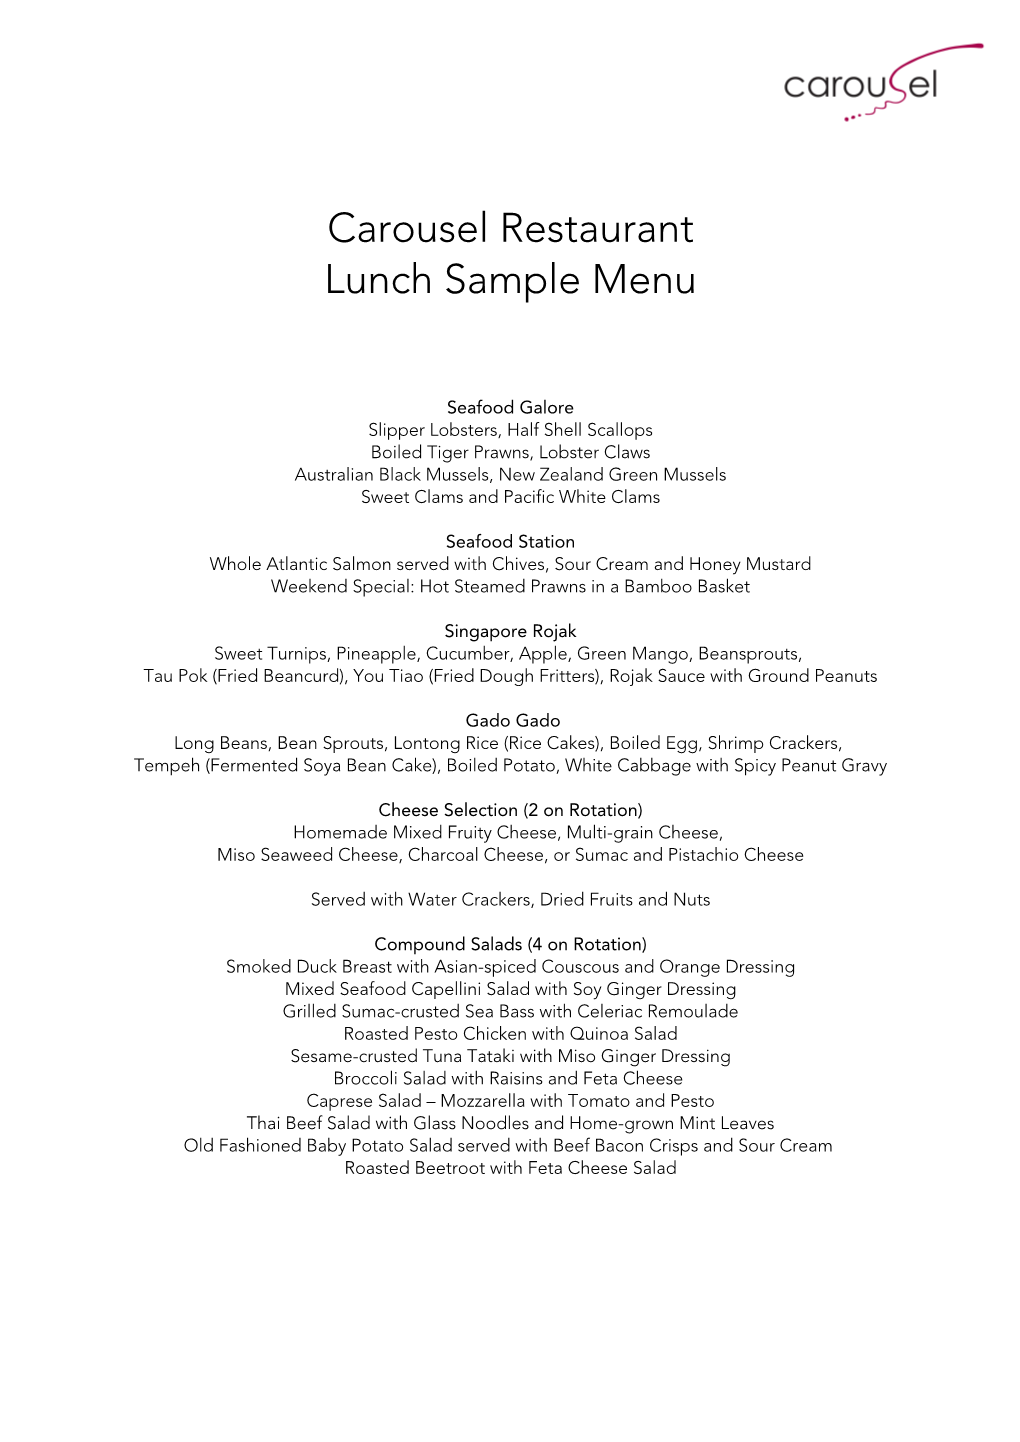 Sample Lunch Buffet Menu 2021, Carousel, Royal Plaza on Scotts